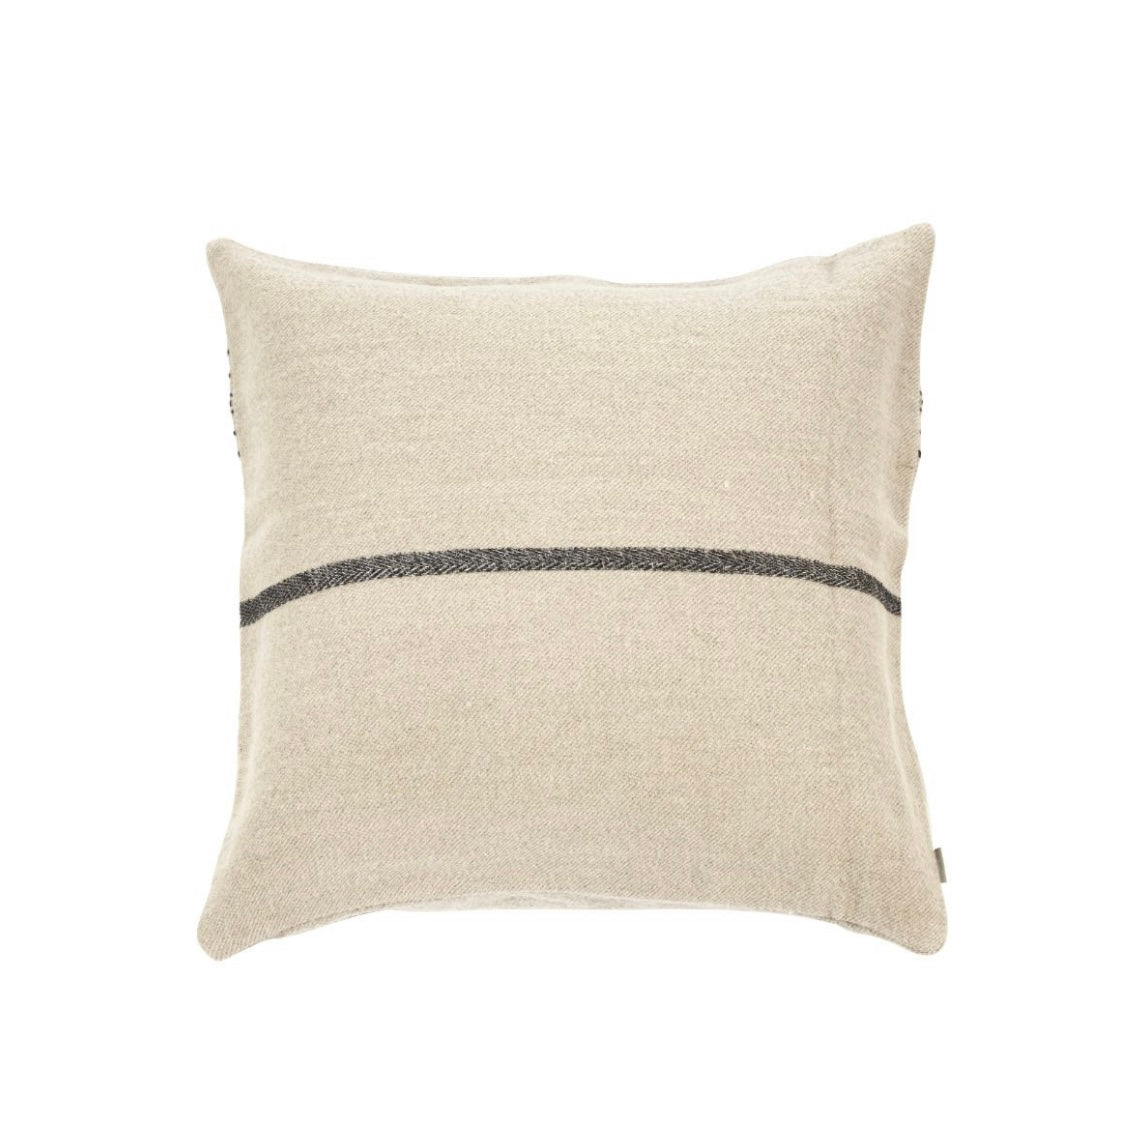 The Moroccan Stripe Pillow